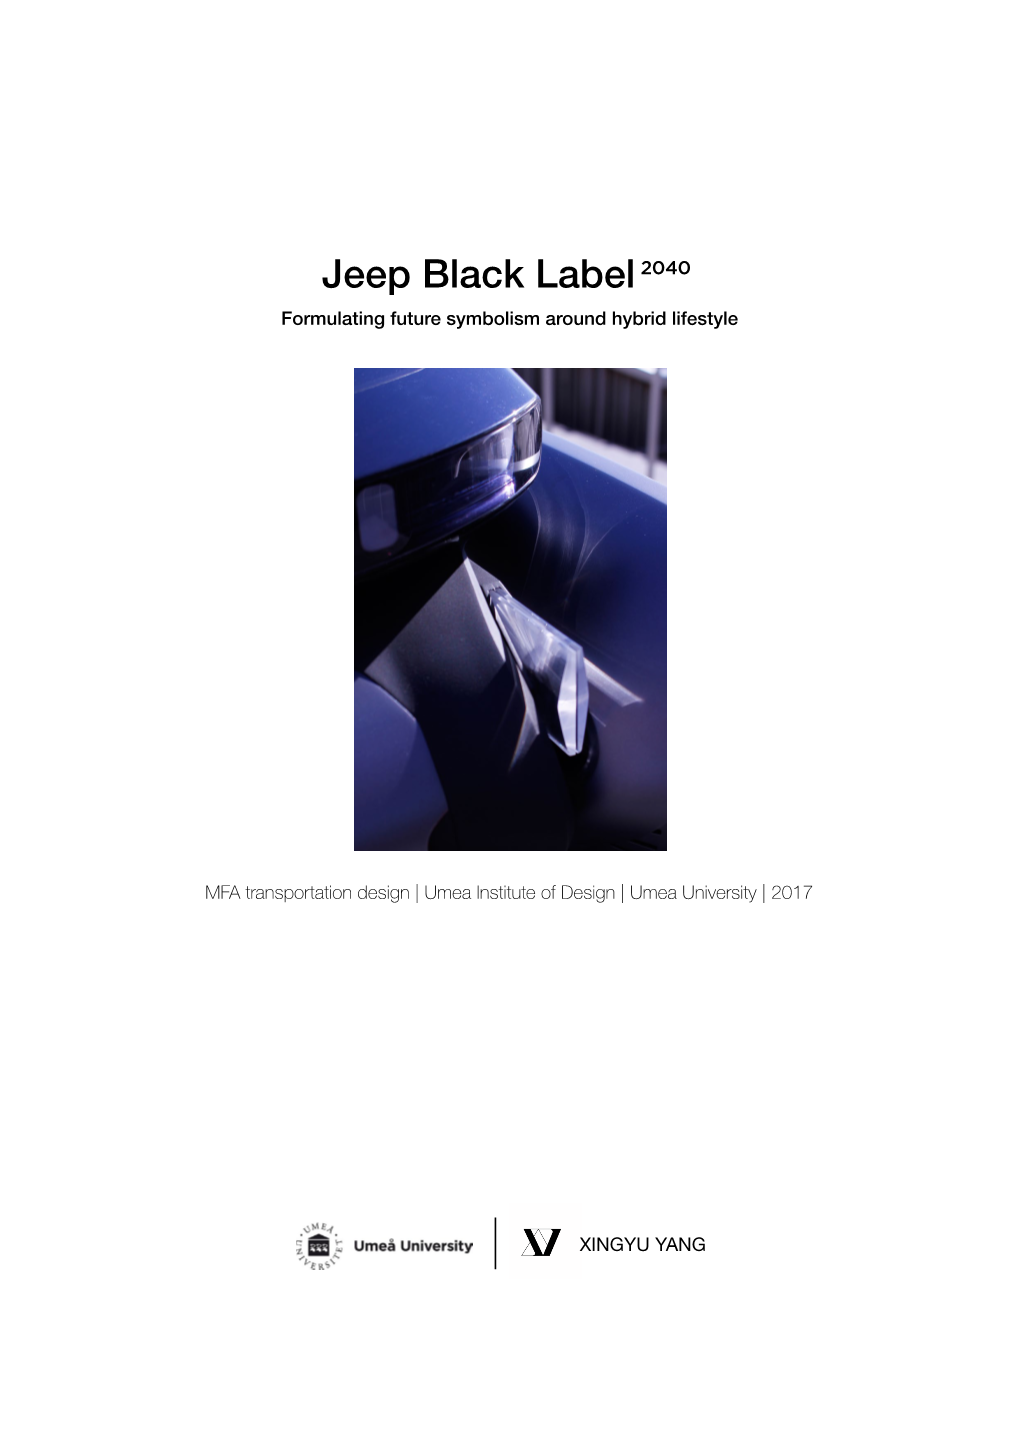 Jeep Black Label 2040 Formulating Future Symbolism Around Hybrid Lifestyle